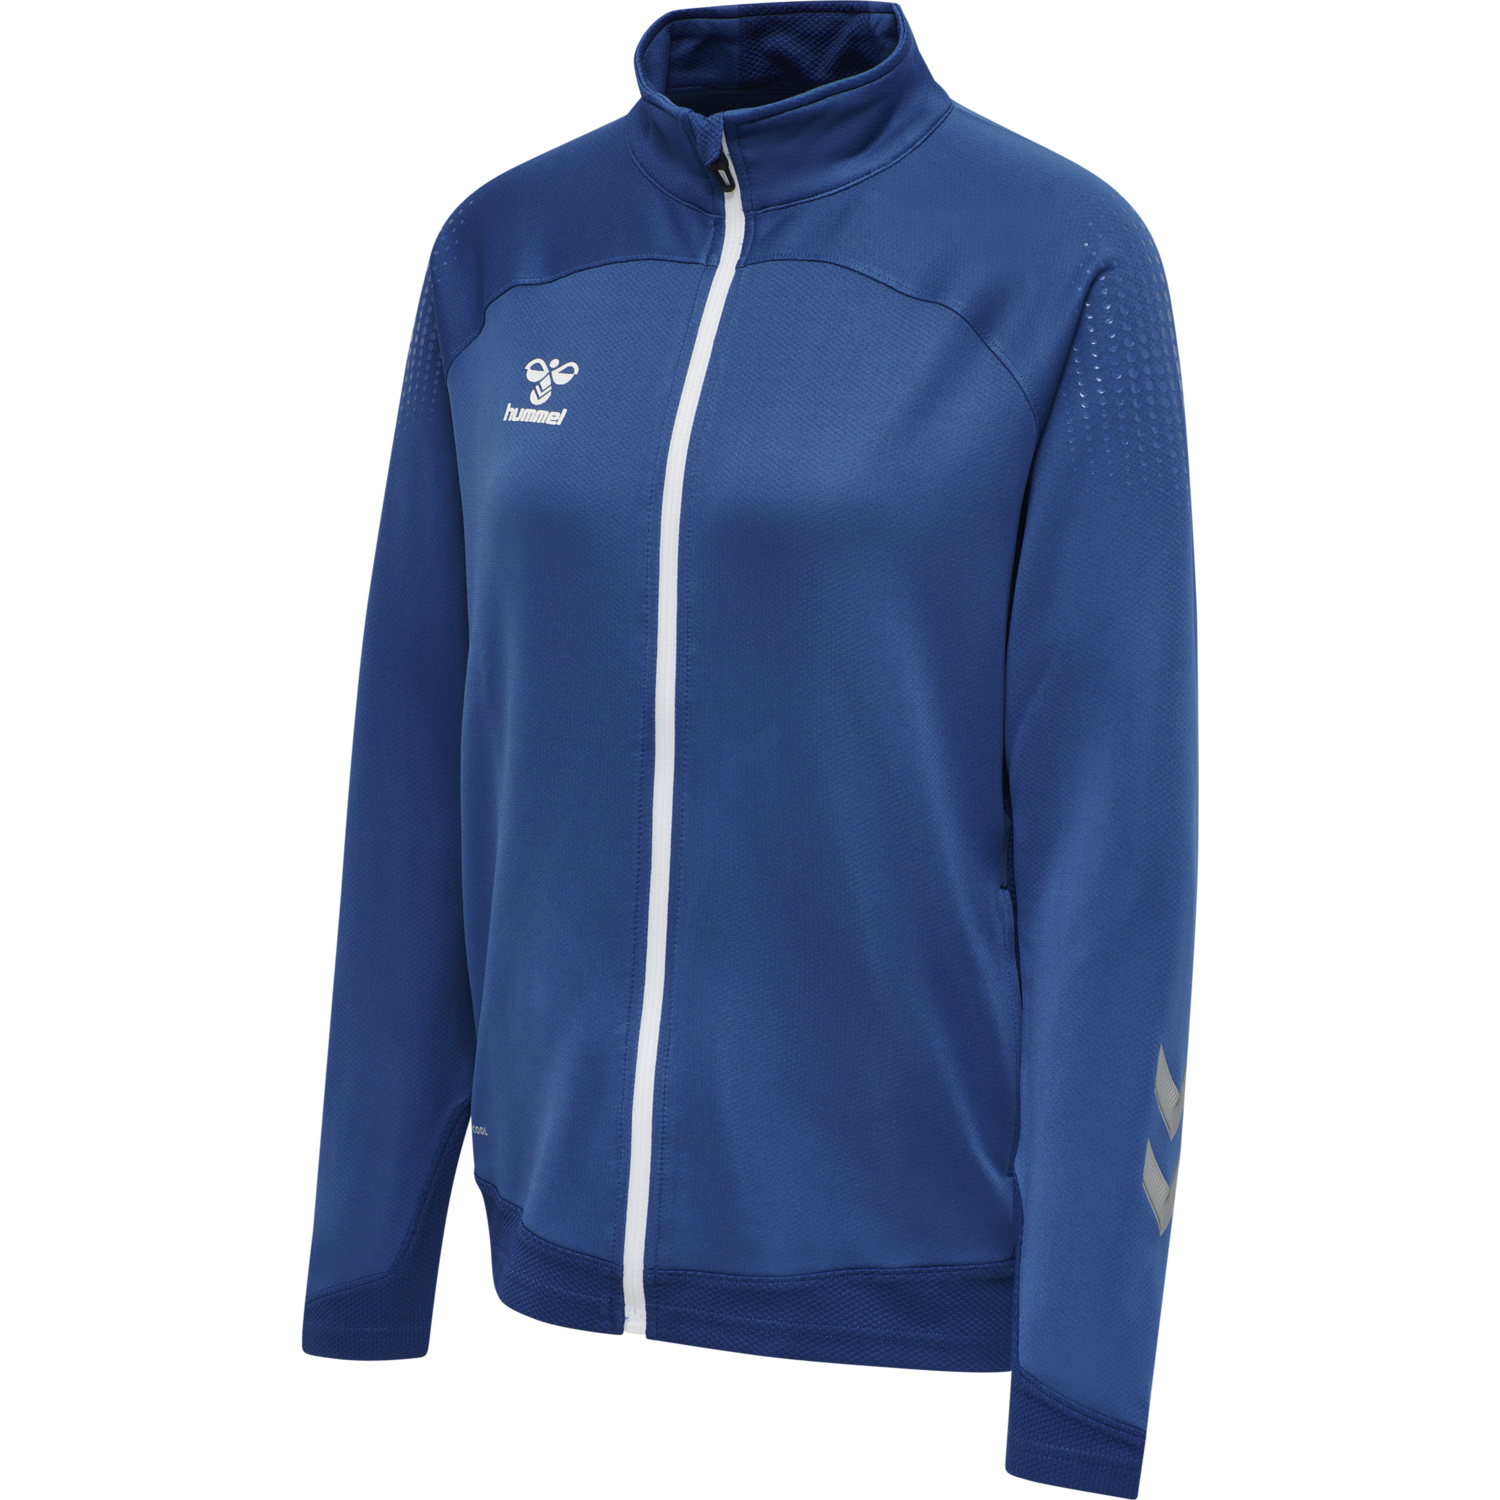 Umbro Sport Womens Jacket Blue Contrast Panels Full Zip Ladies Sports Training 